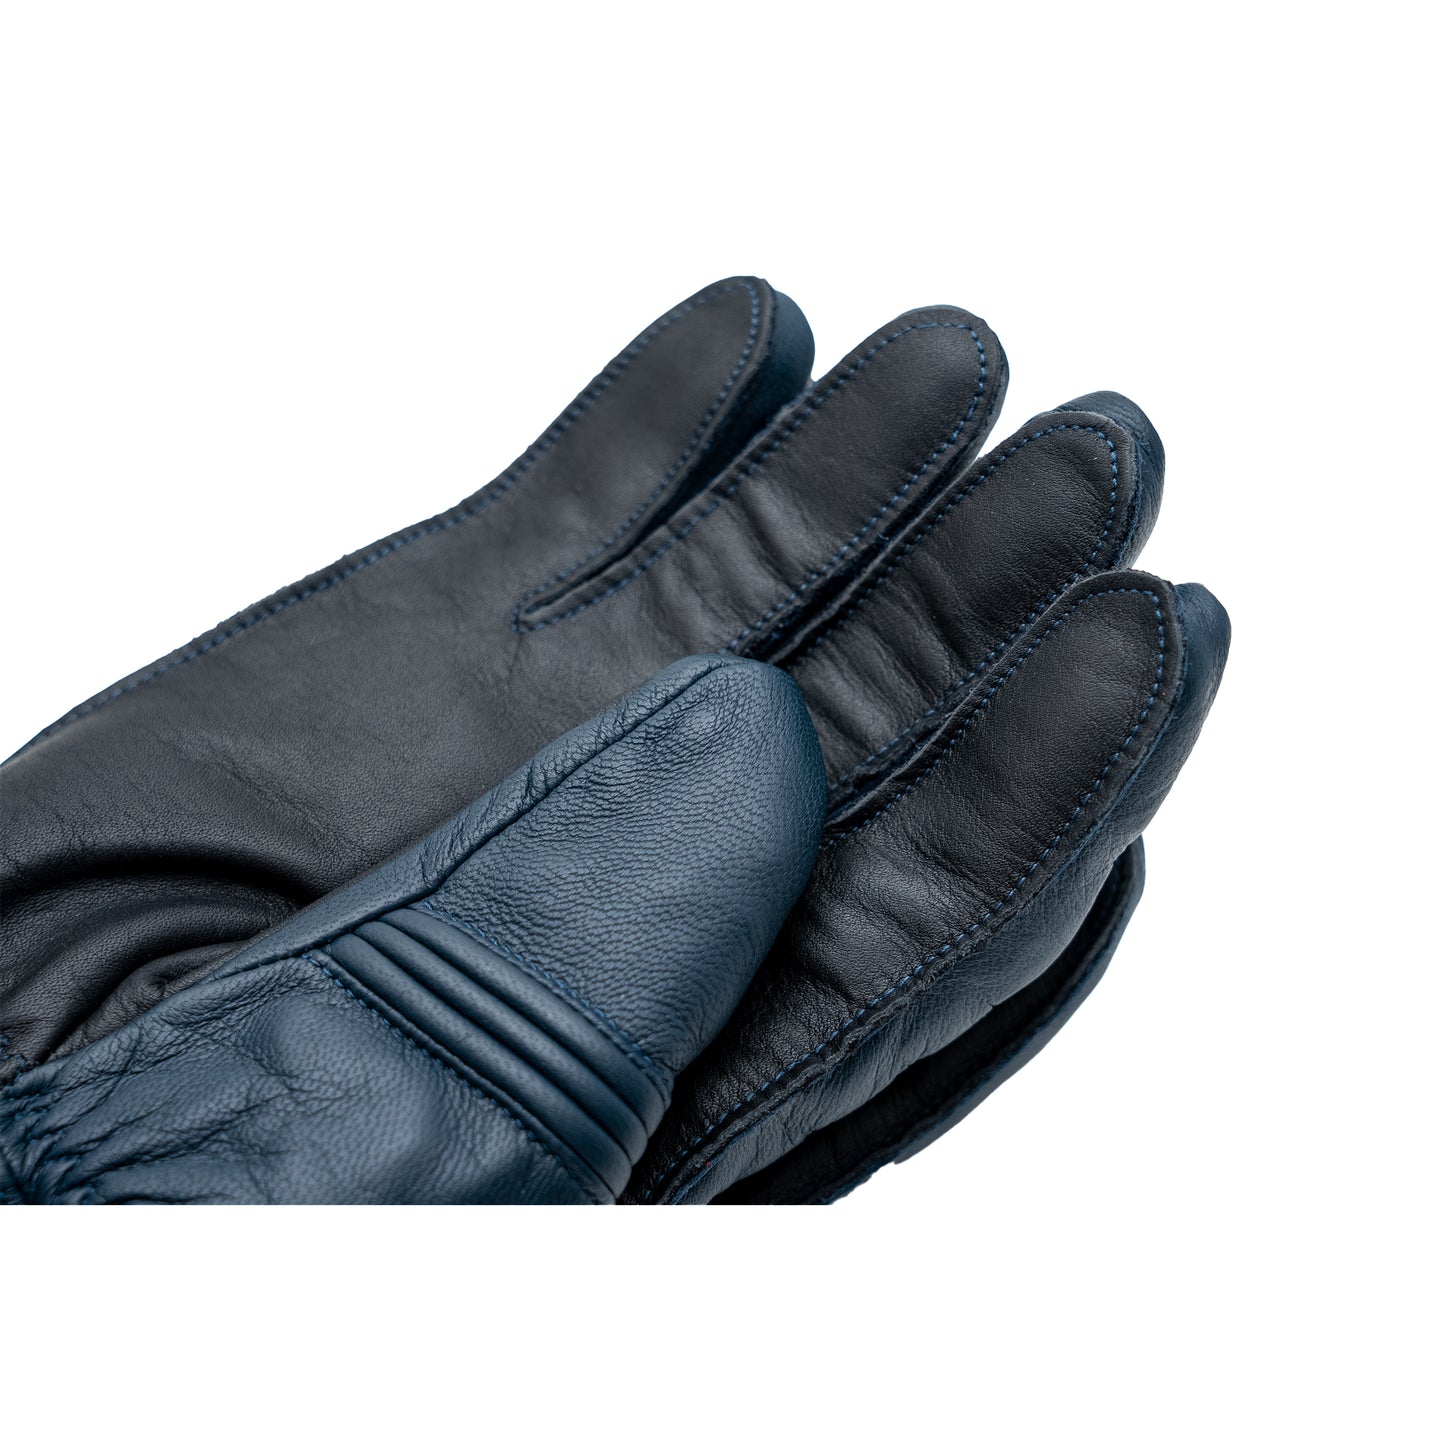 SX-200 Classic Leather Glove